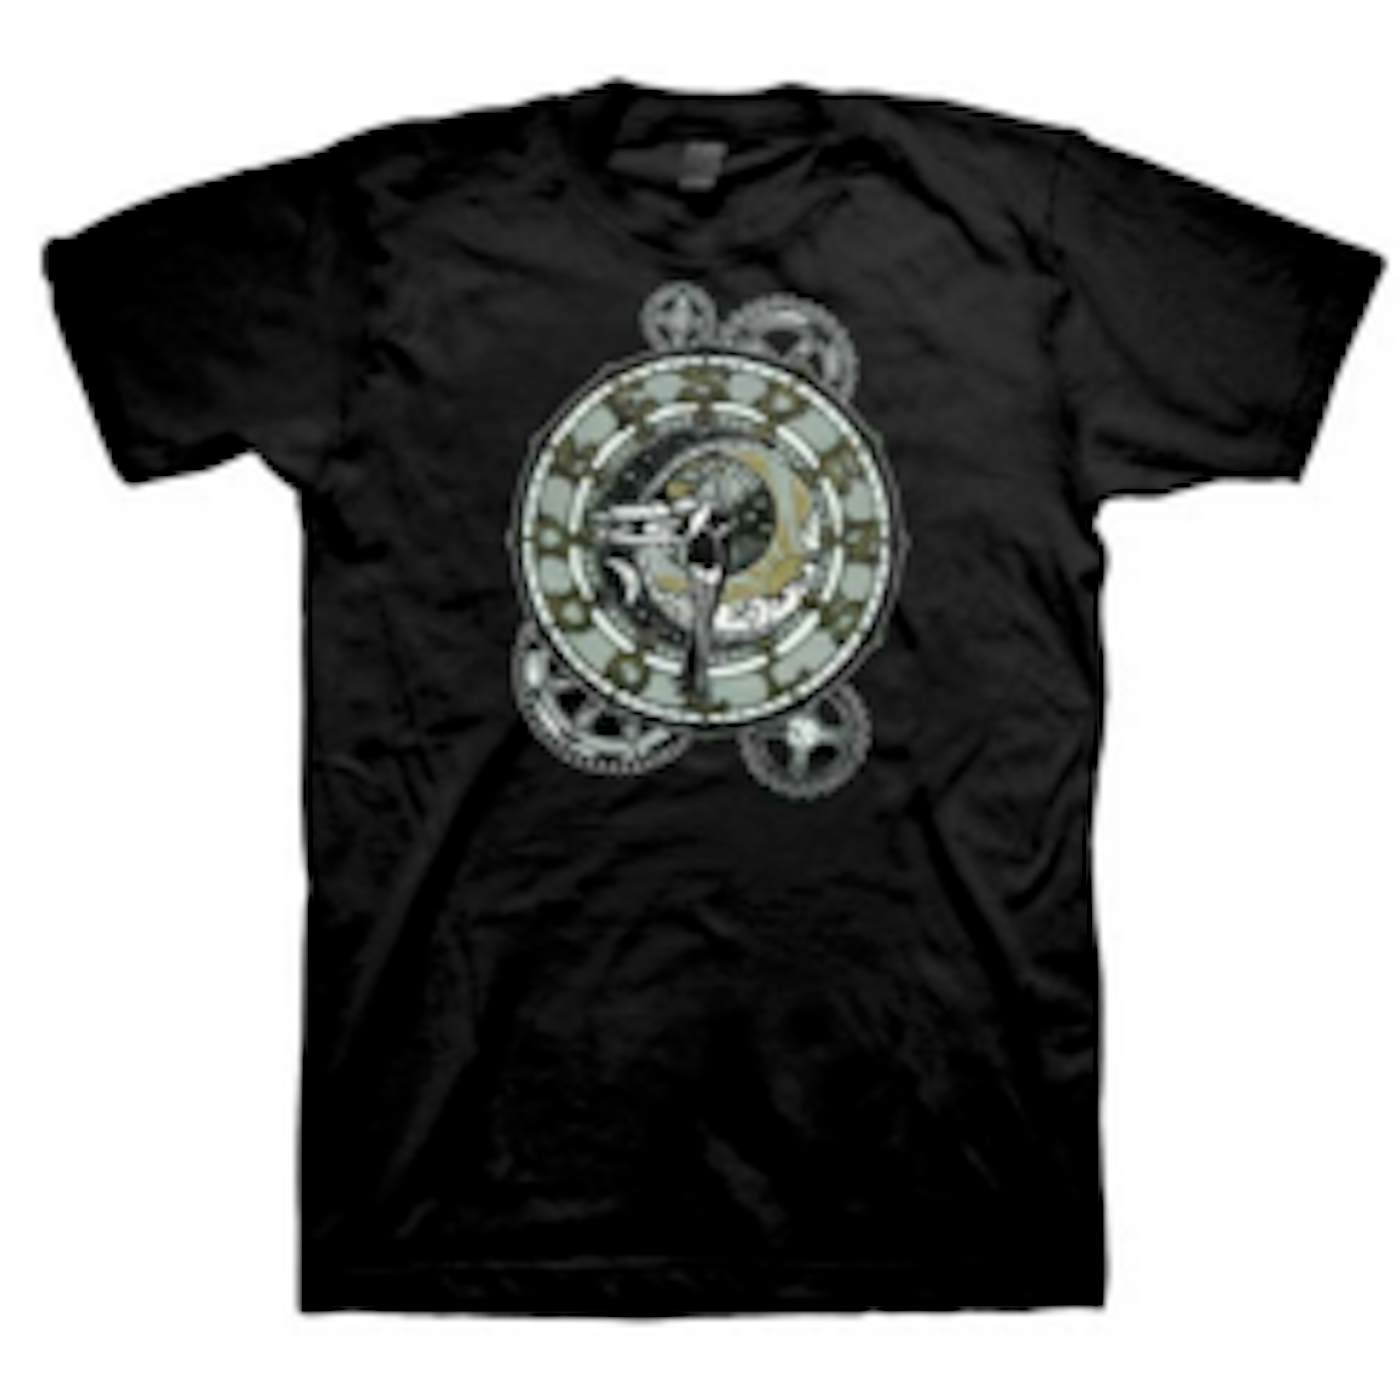 Amanda Palmer The Dresden Dolls - Clockwork T-shirt